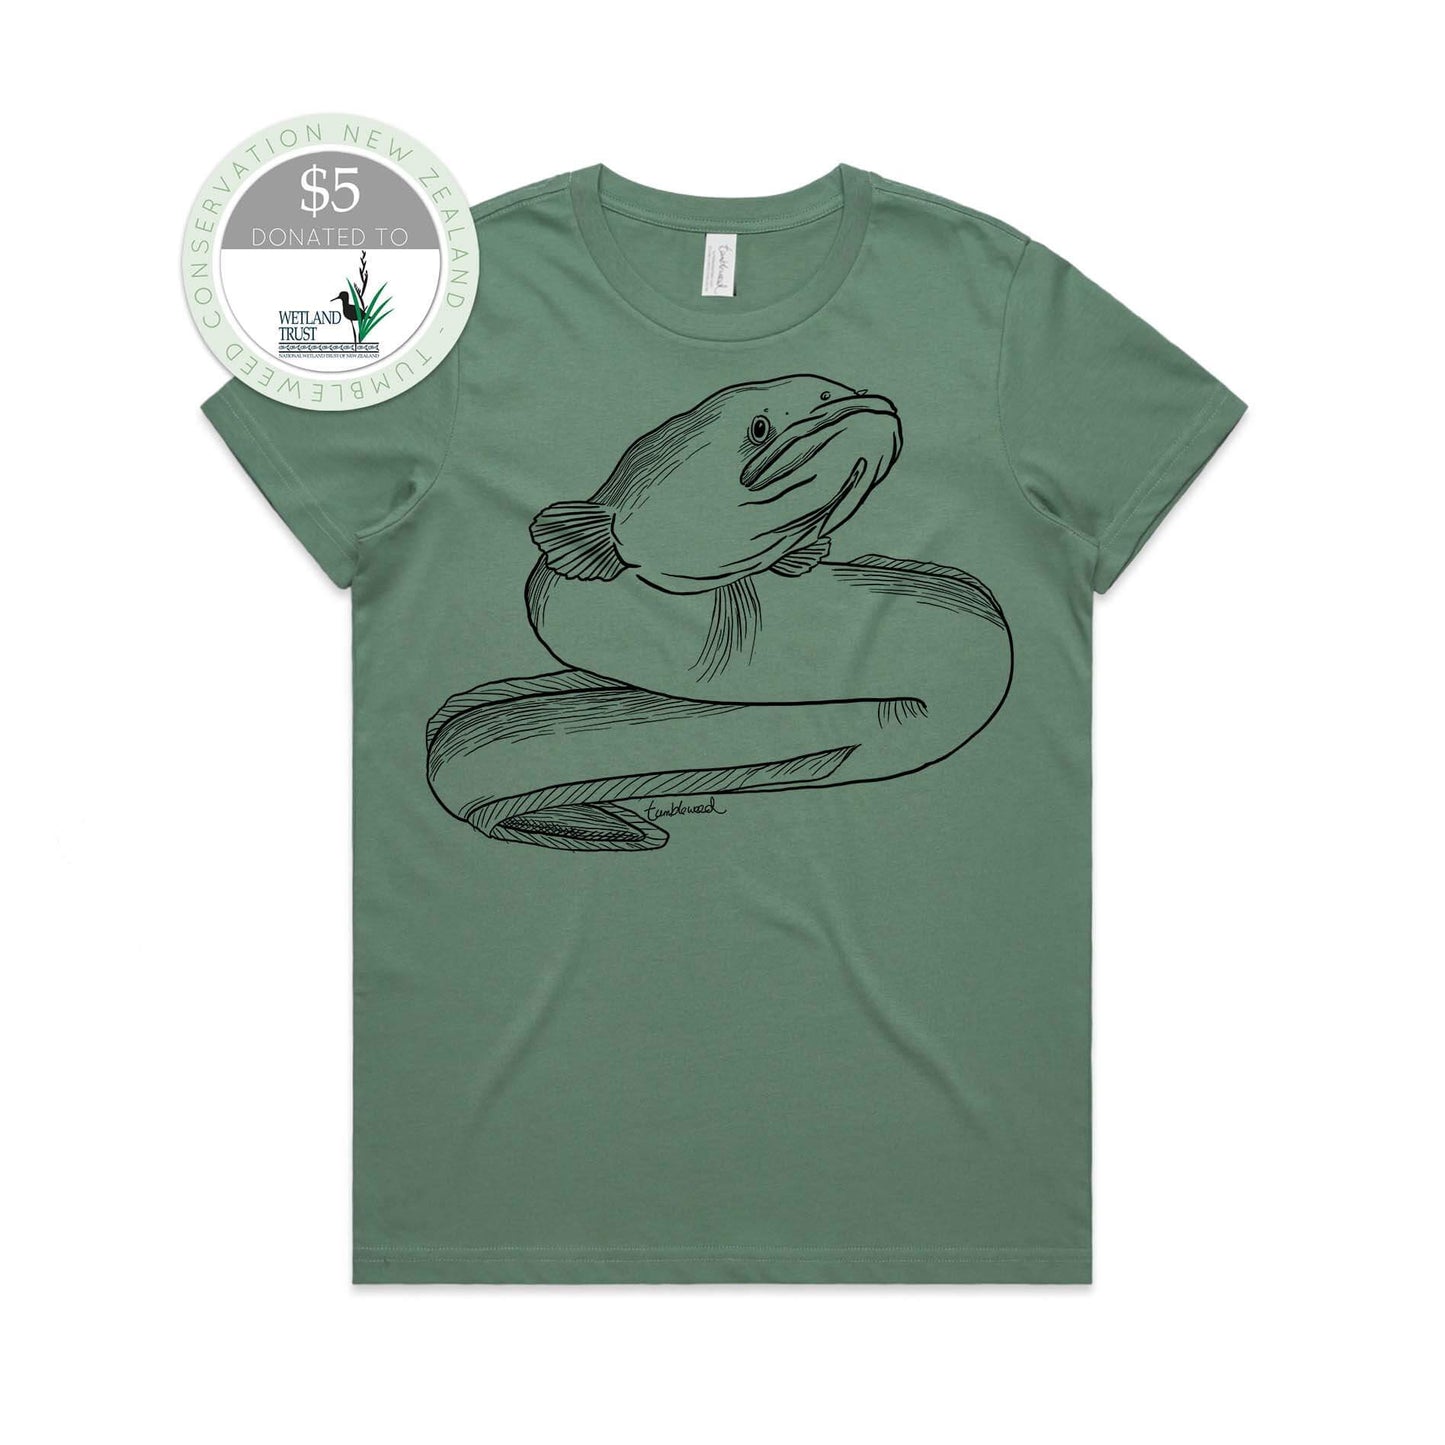 Sage, female t-shirt featuring a screen printed Longfin Eel/Tuna design.